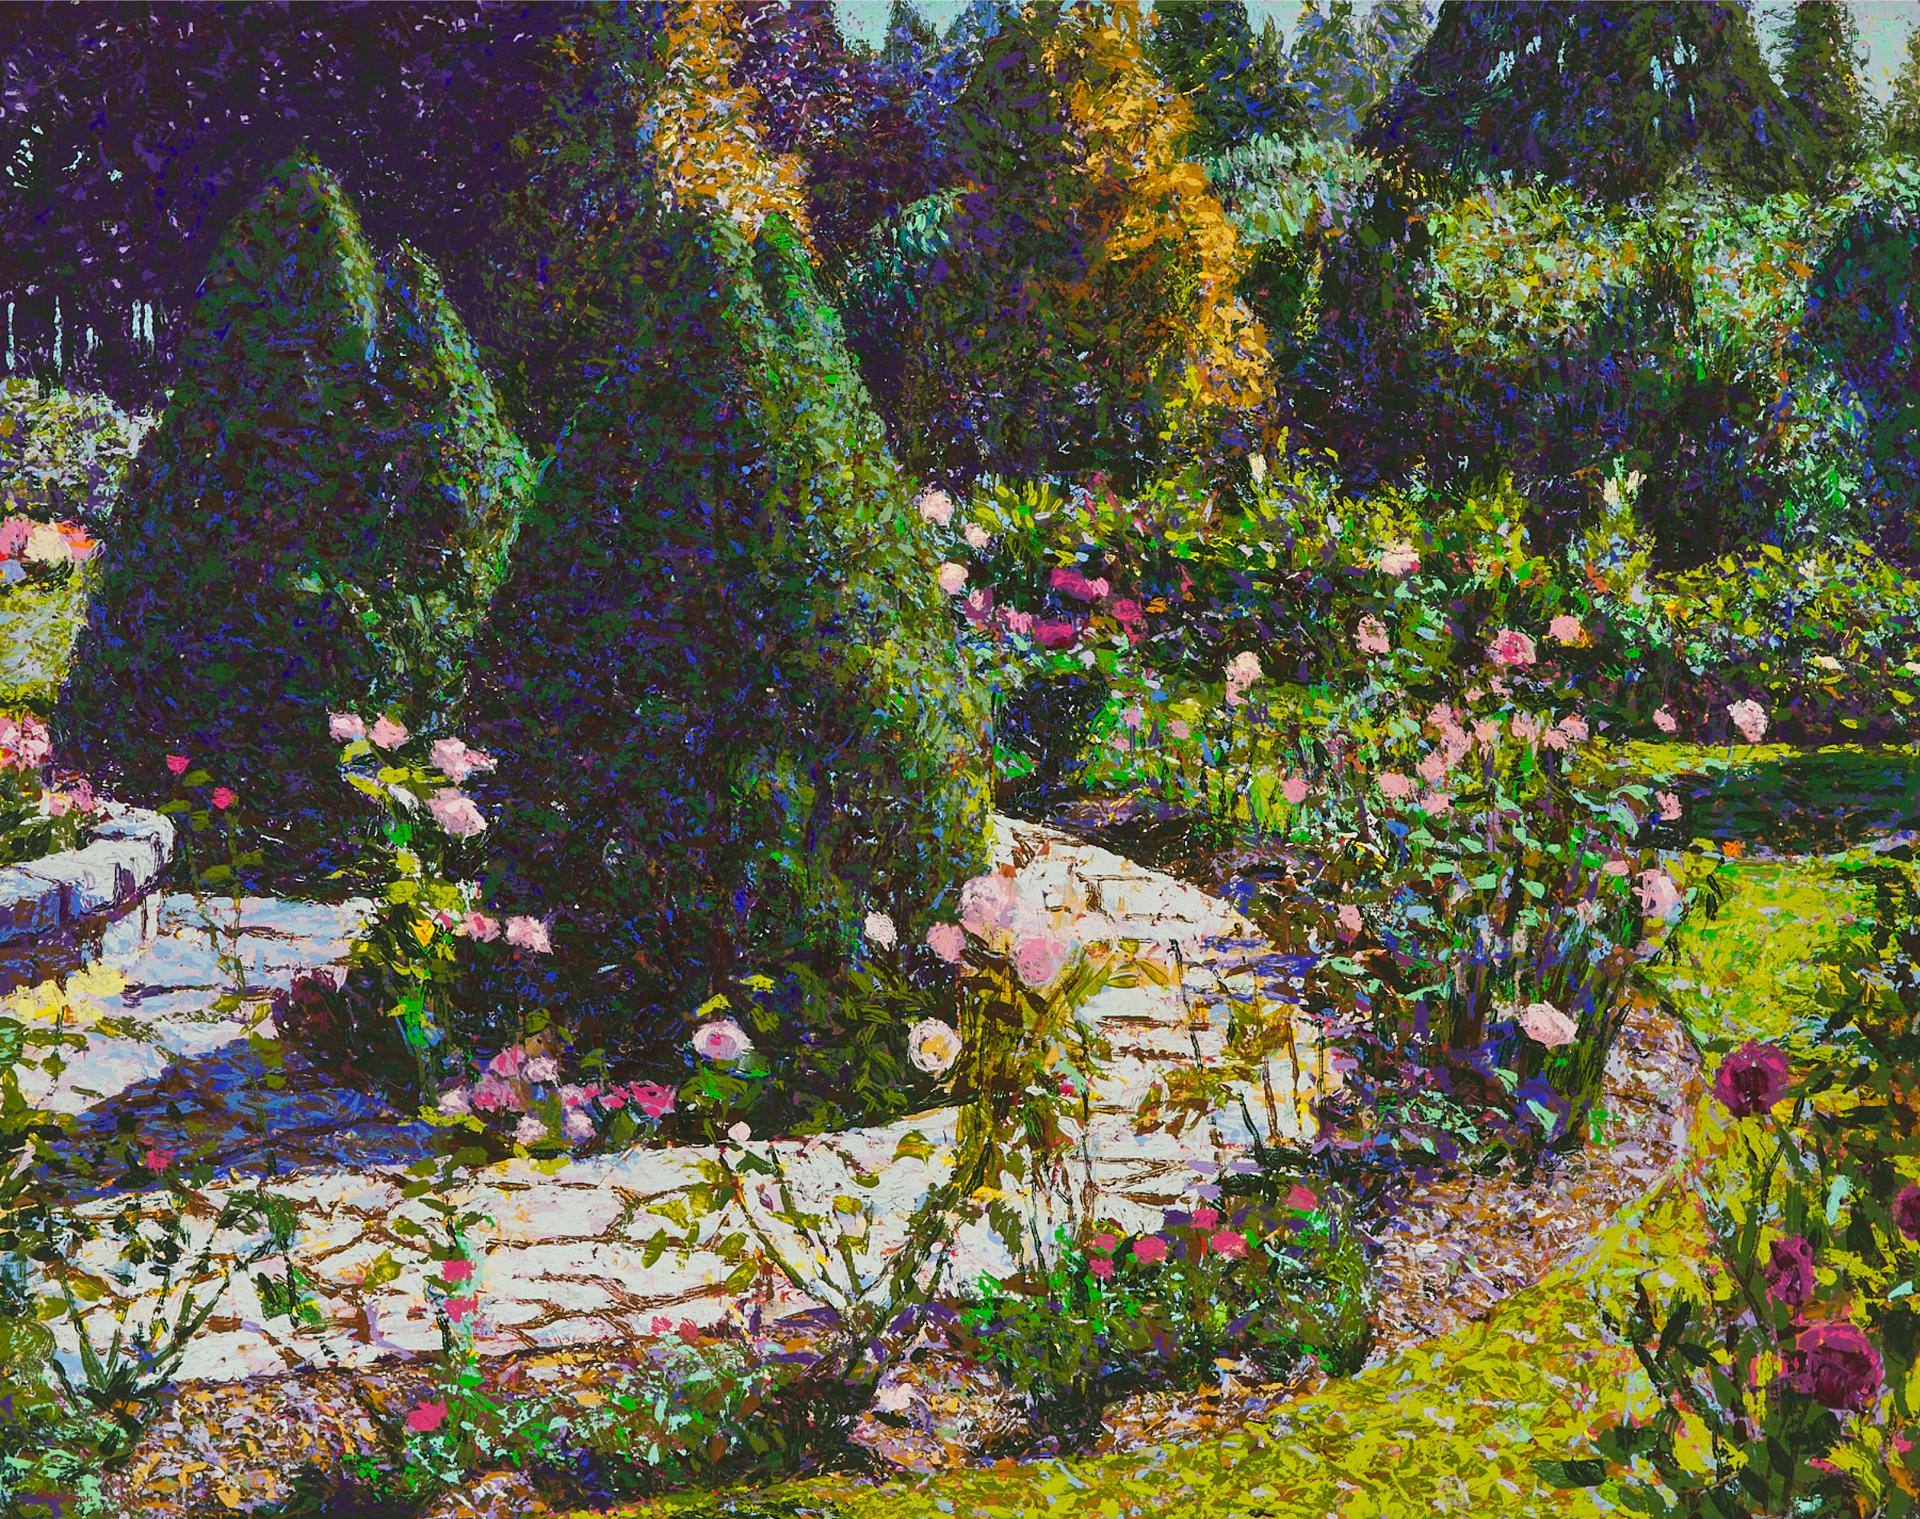 Brent McIntosh (1959) - Garden, Vancouver, 1988